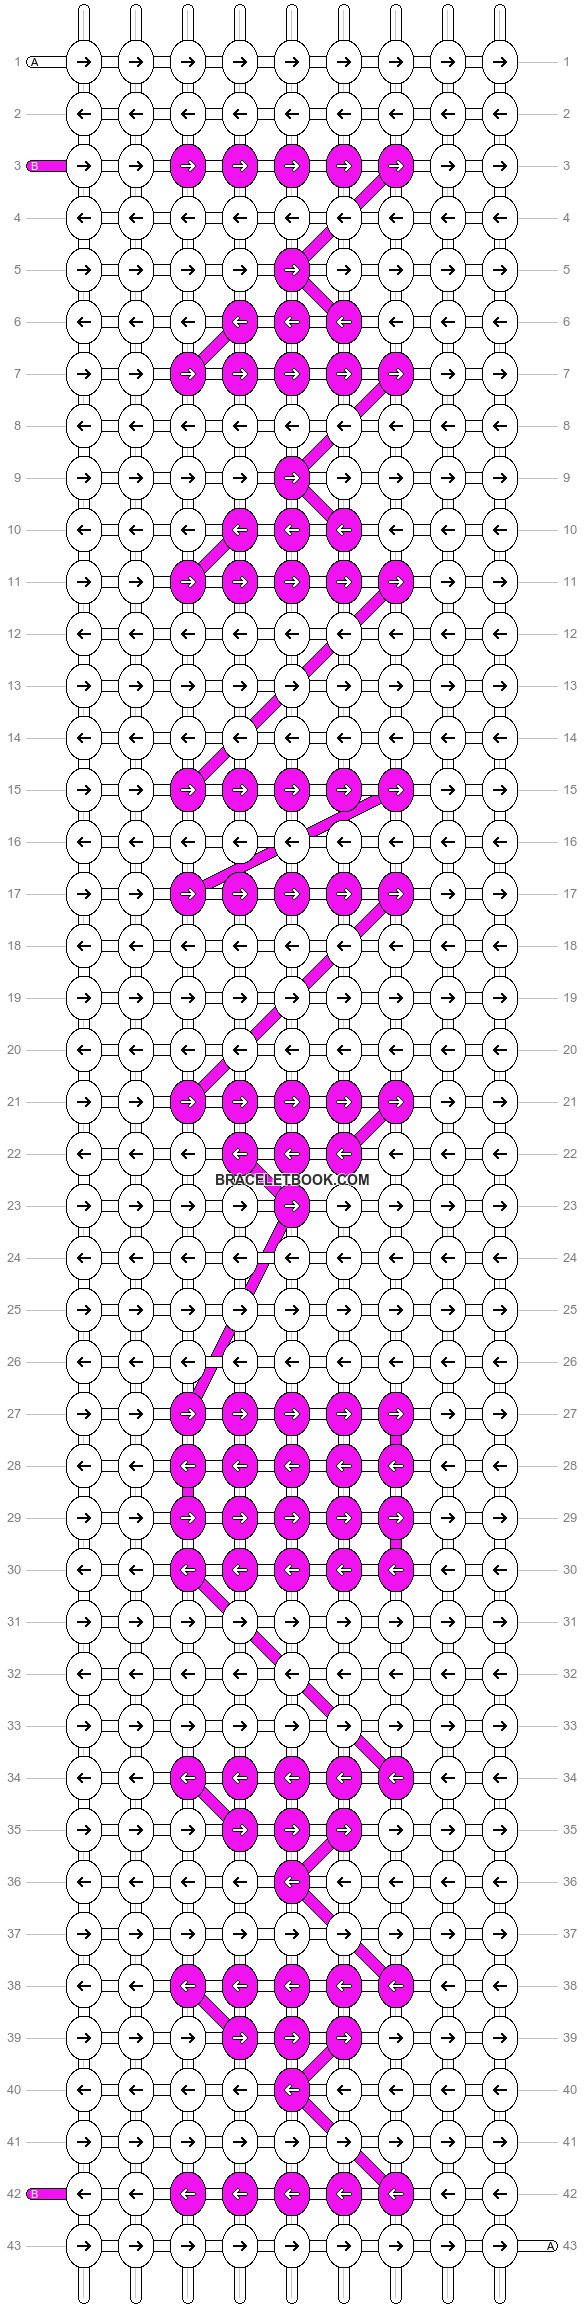 Alpha pattern #11550 pattern